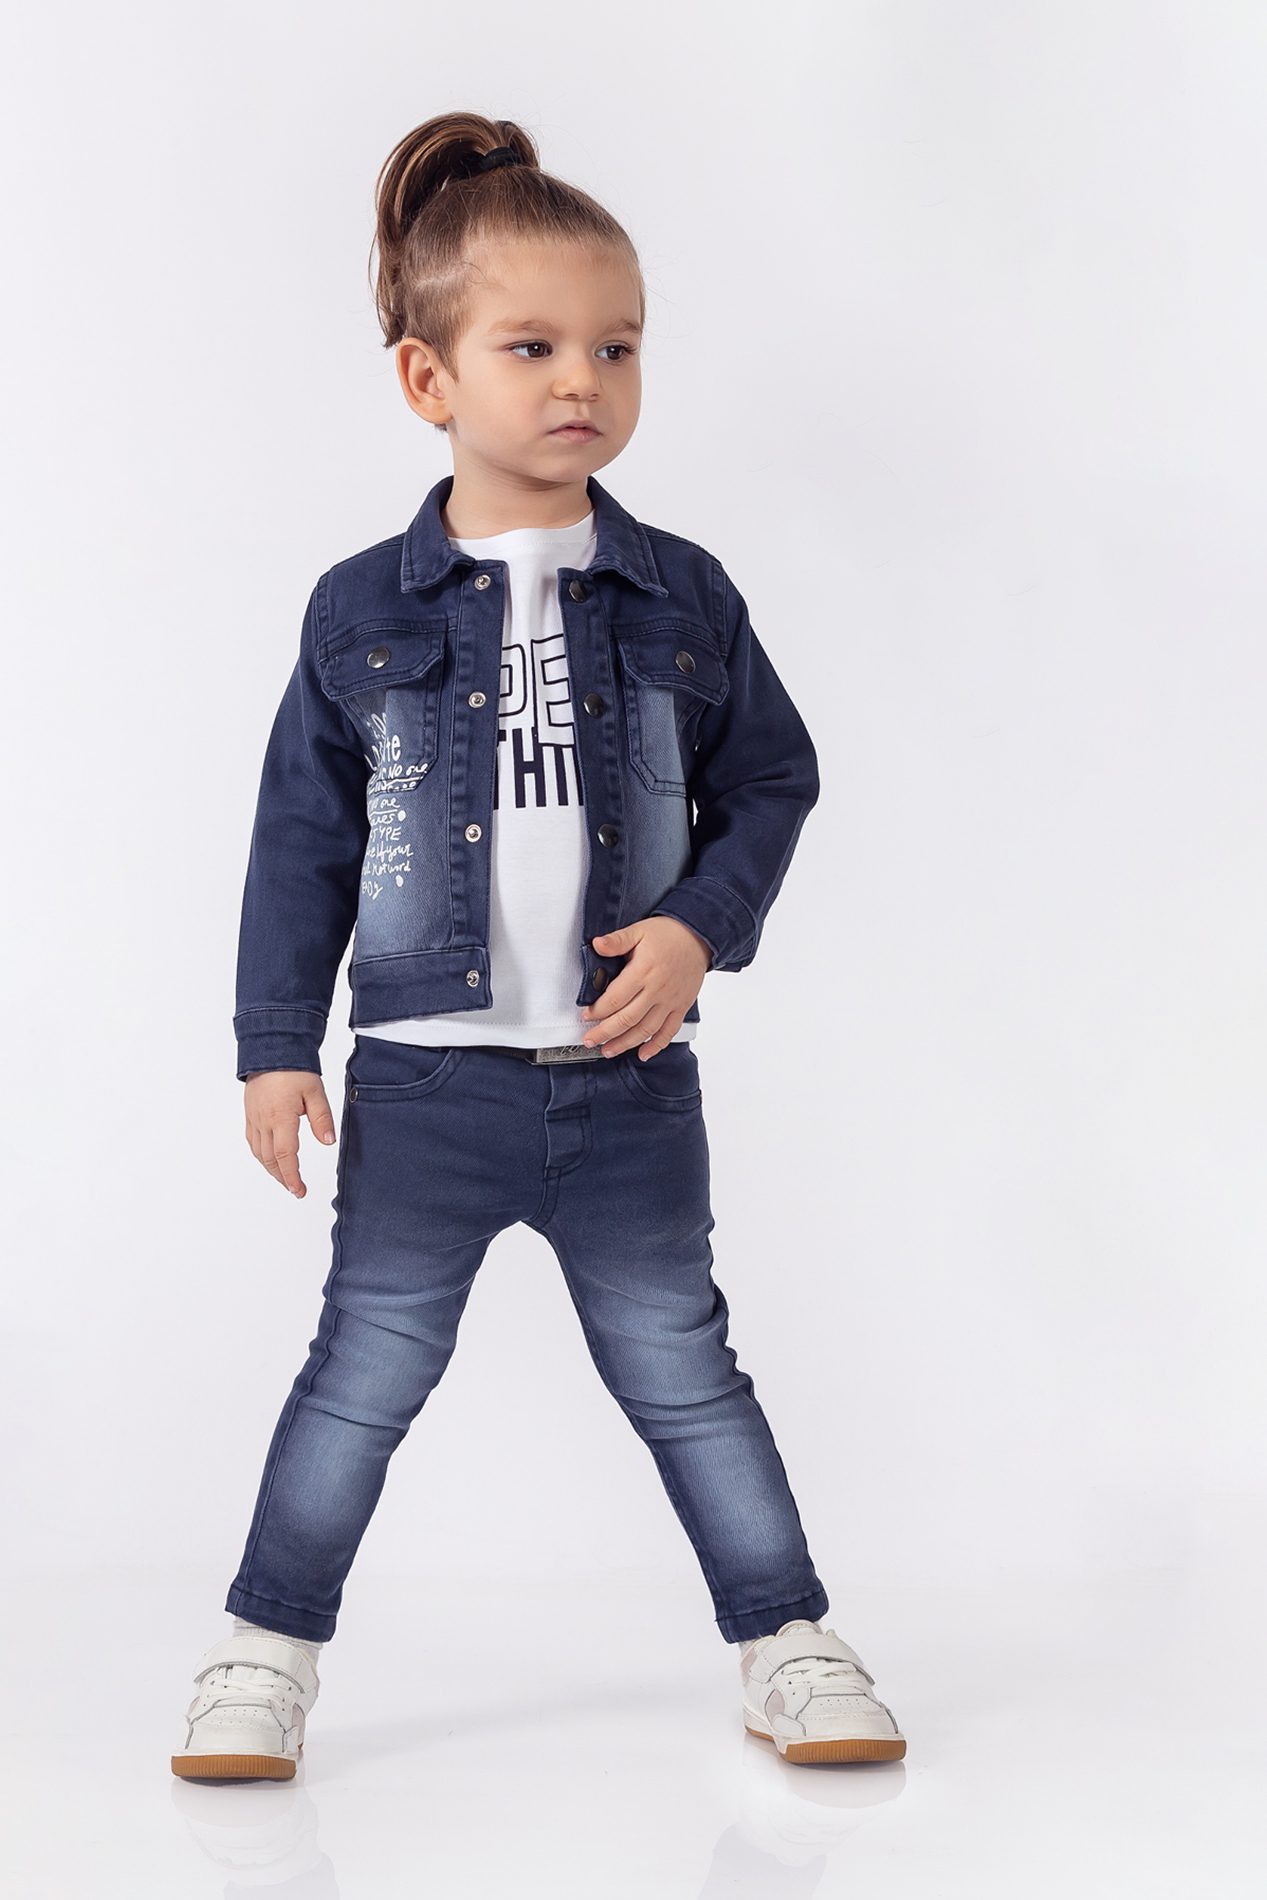 Boy 3 Pieces Sulfur Suit Set (Jacket + T-Shirt + Jean) / 2-5Y Or 6-9Y - Kids Fashion Turkey